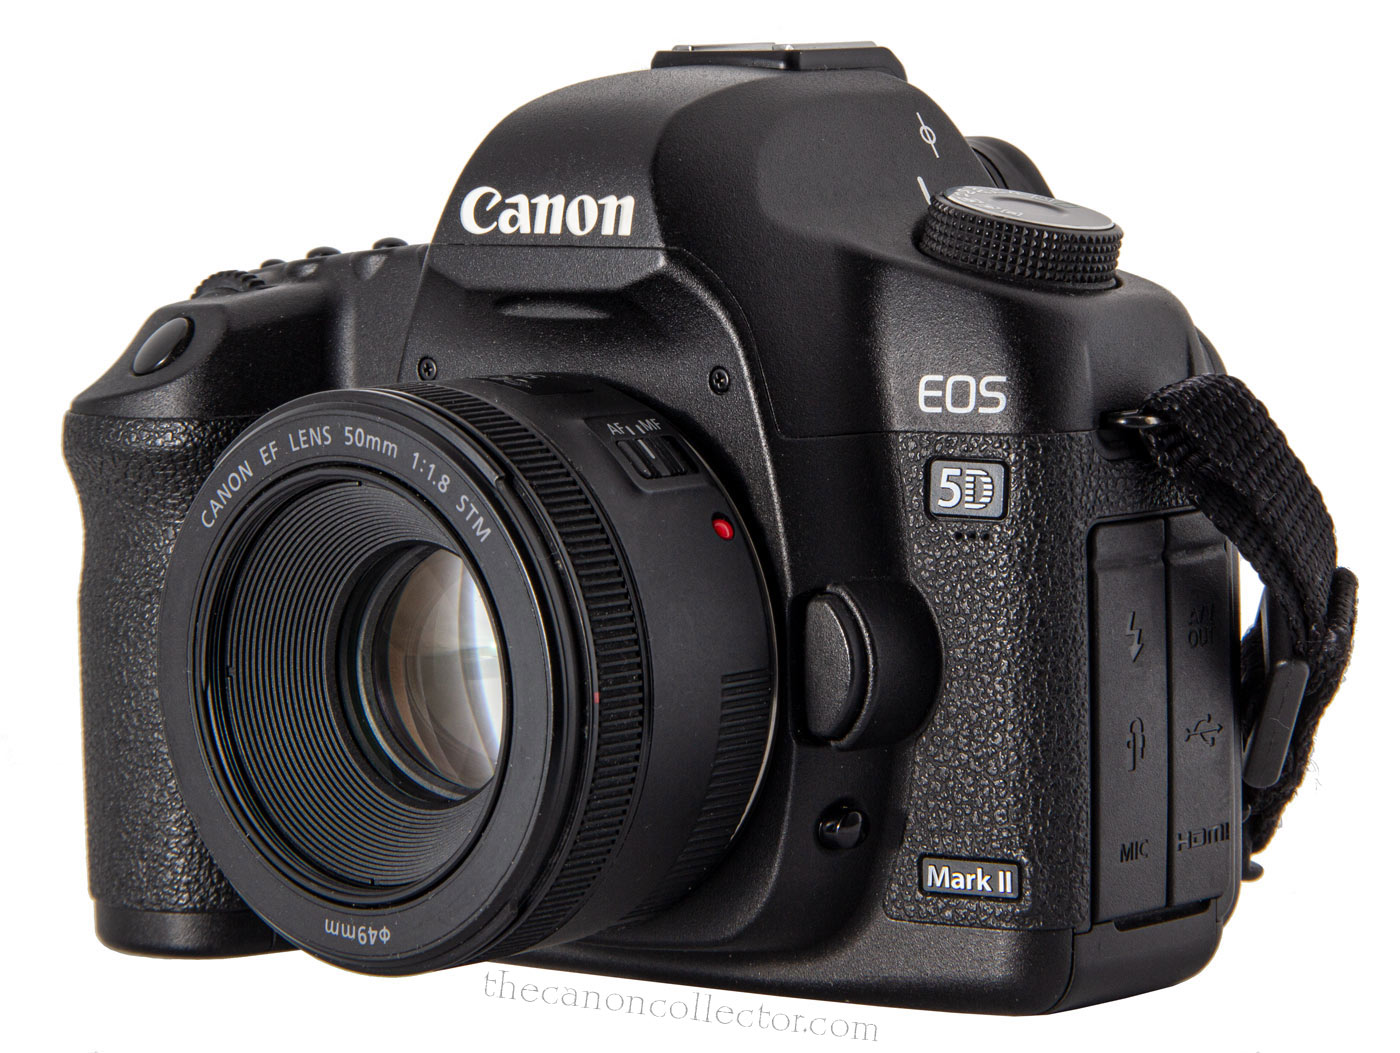 Canon EF 50mm F/1.8 STM